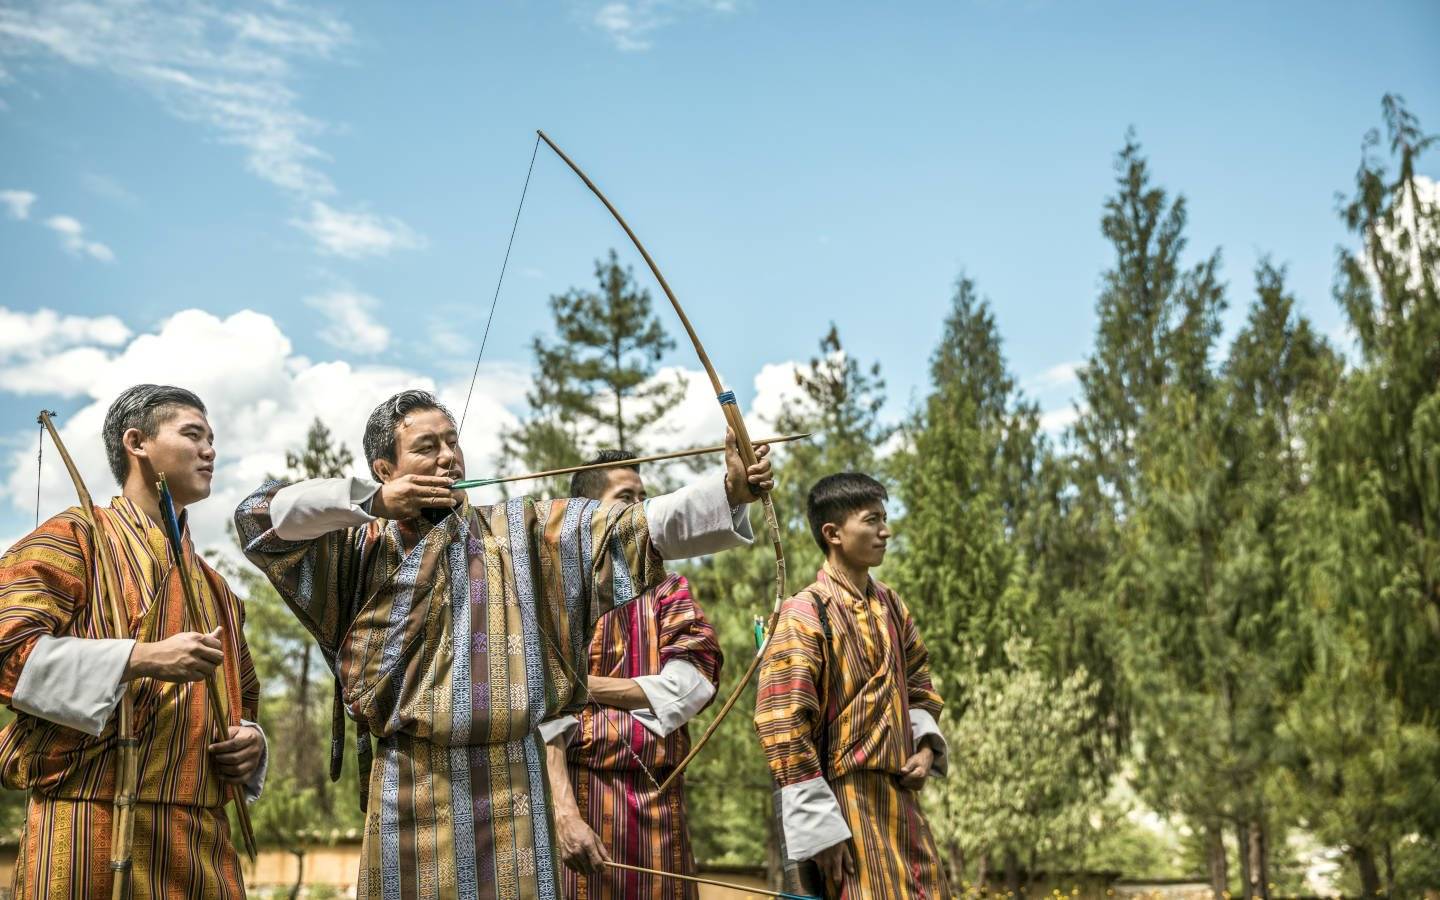 Archers in Paro. Archery is the national Sport of Bhutan and is seen on Mountain Trek Adventure Trek